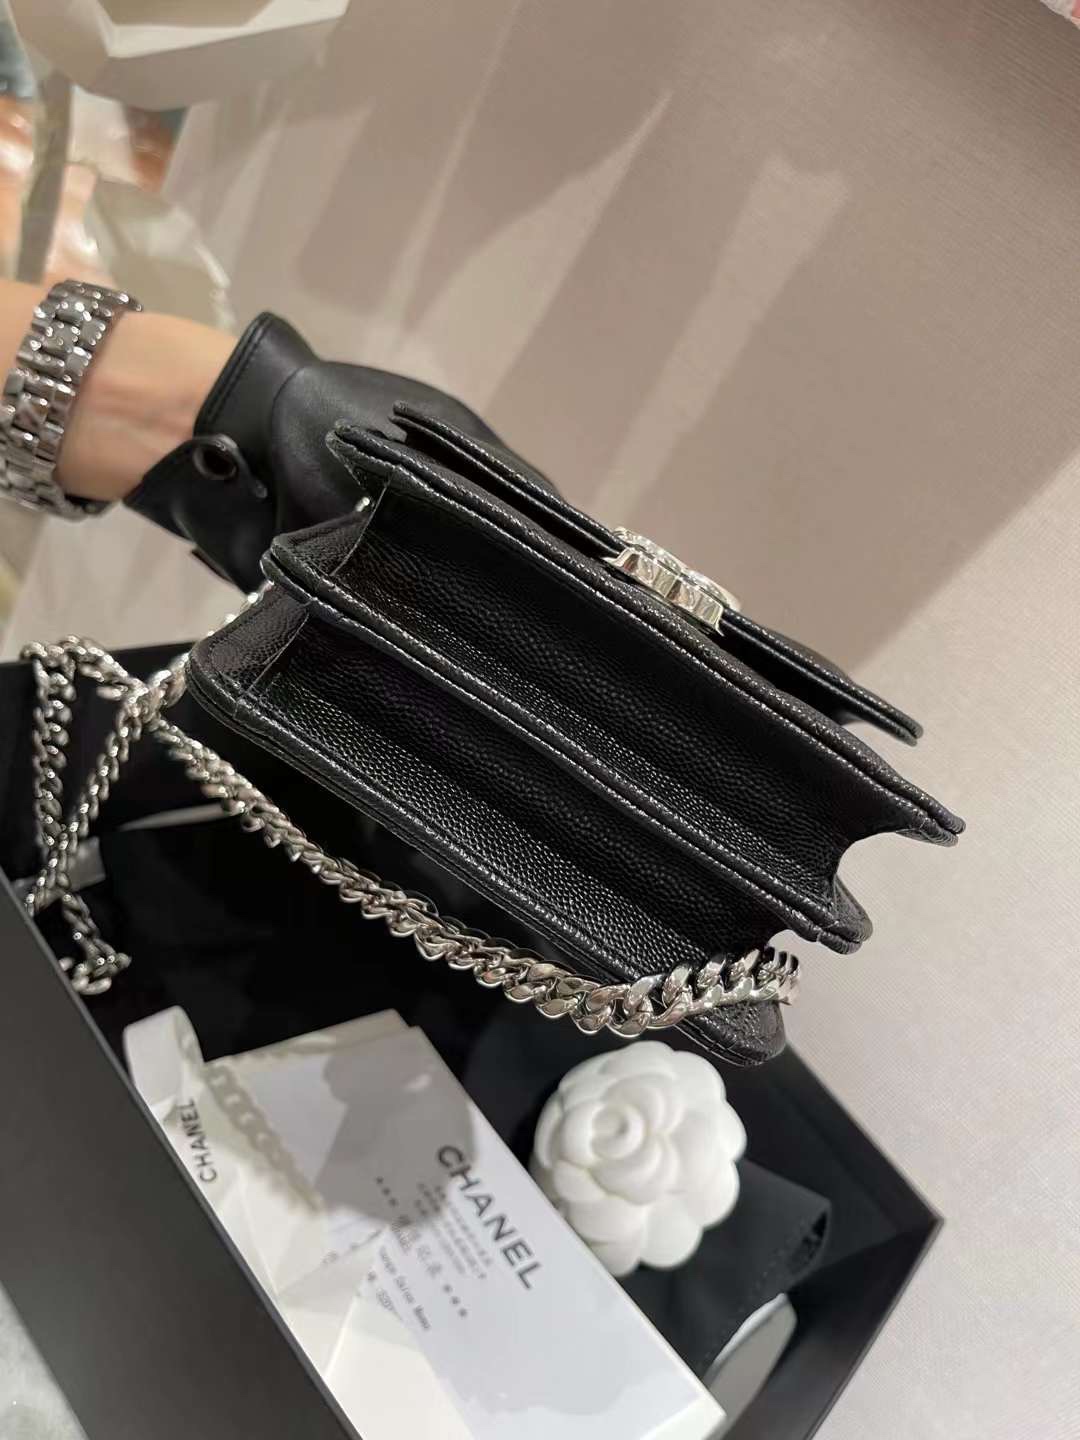 【P1170】Chanel女包价格 香奈儿巴黎高级手工坊珐琅扣手提链条斜挎包 黑色